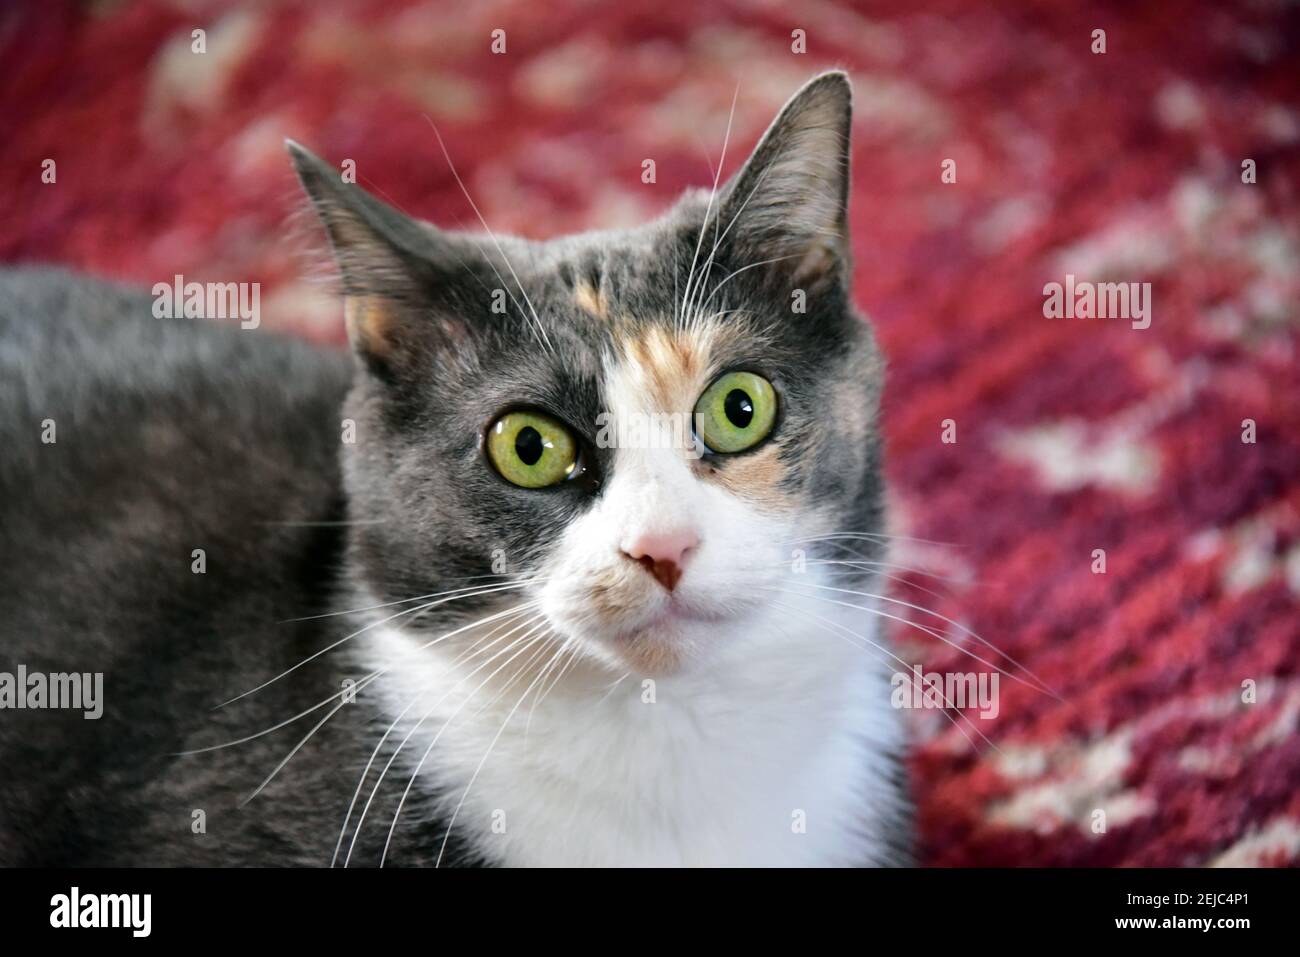 Big eyed grey cat laying on red decorative carpet Stock Photo